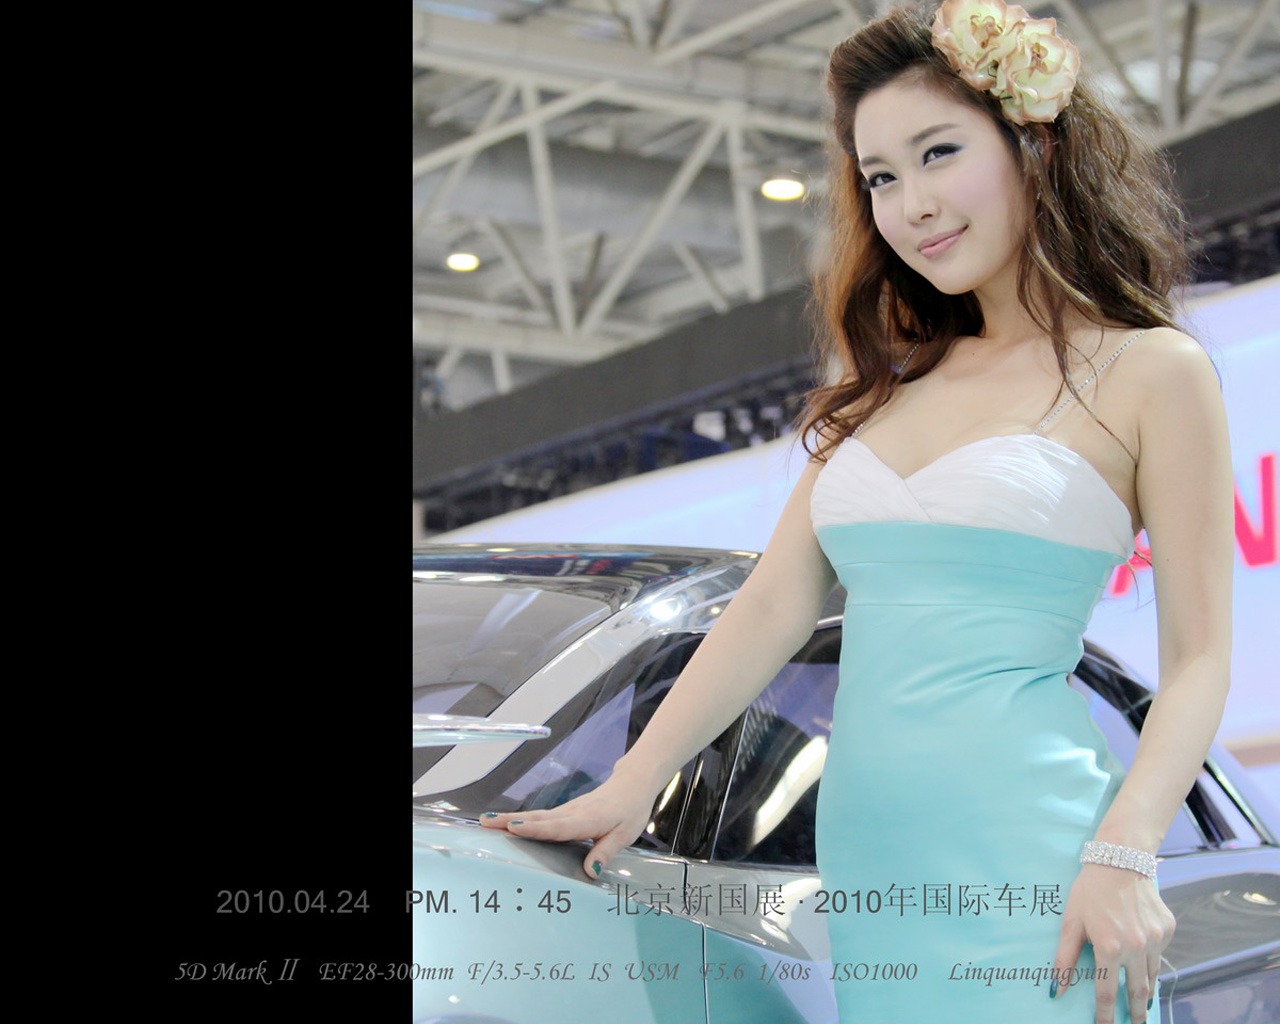 2010-4-24 Beijing International Auto Show (Linquan Qing Yun works) #12 - 1280x1024